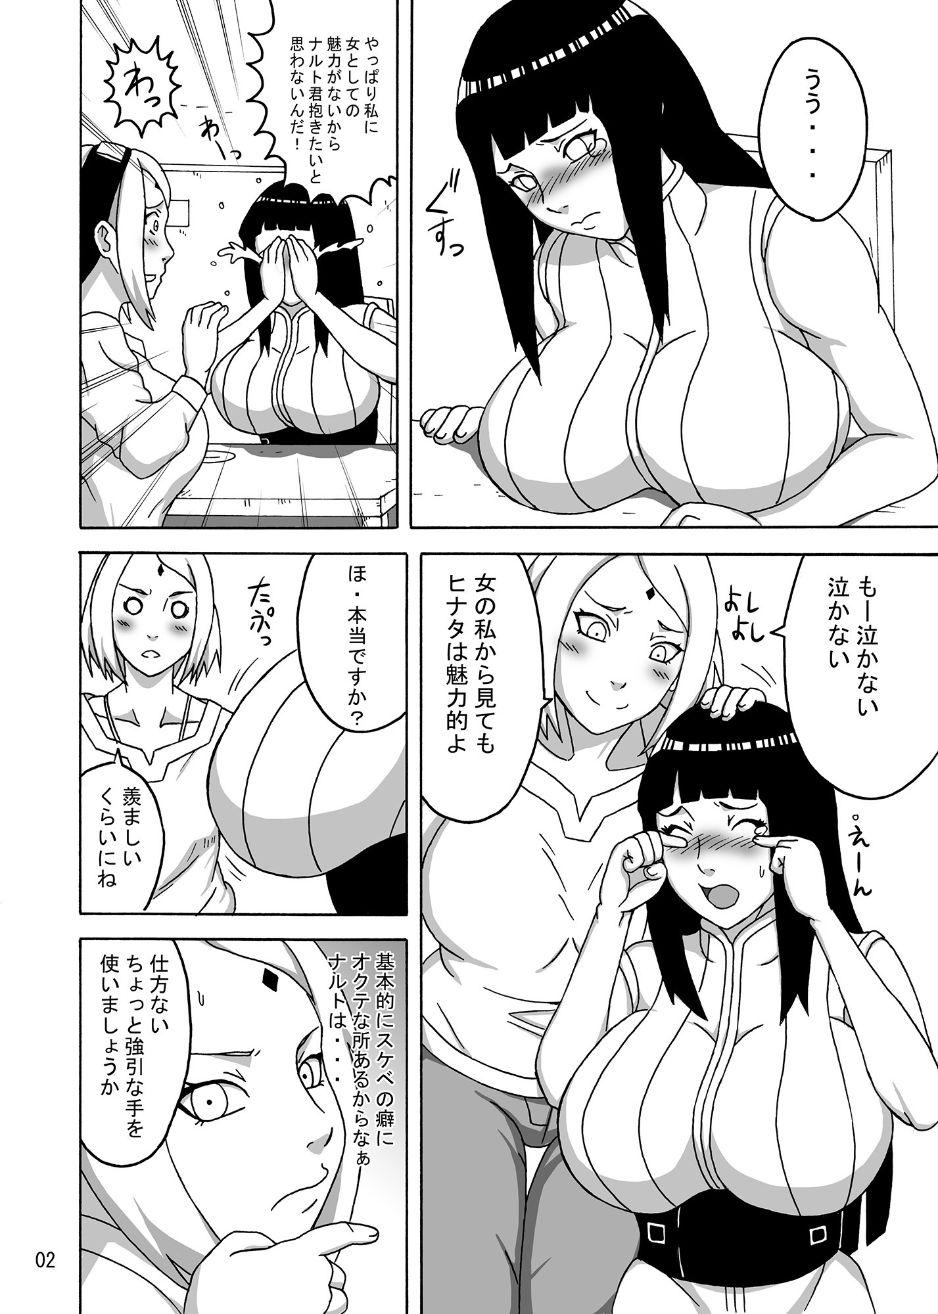 Pov Sex naruhina - Naruto Spycam - Page 5